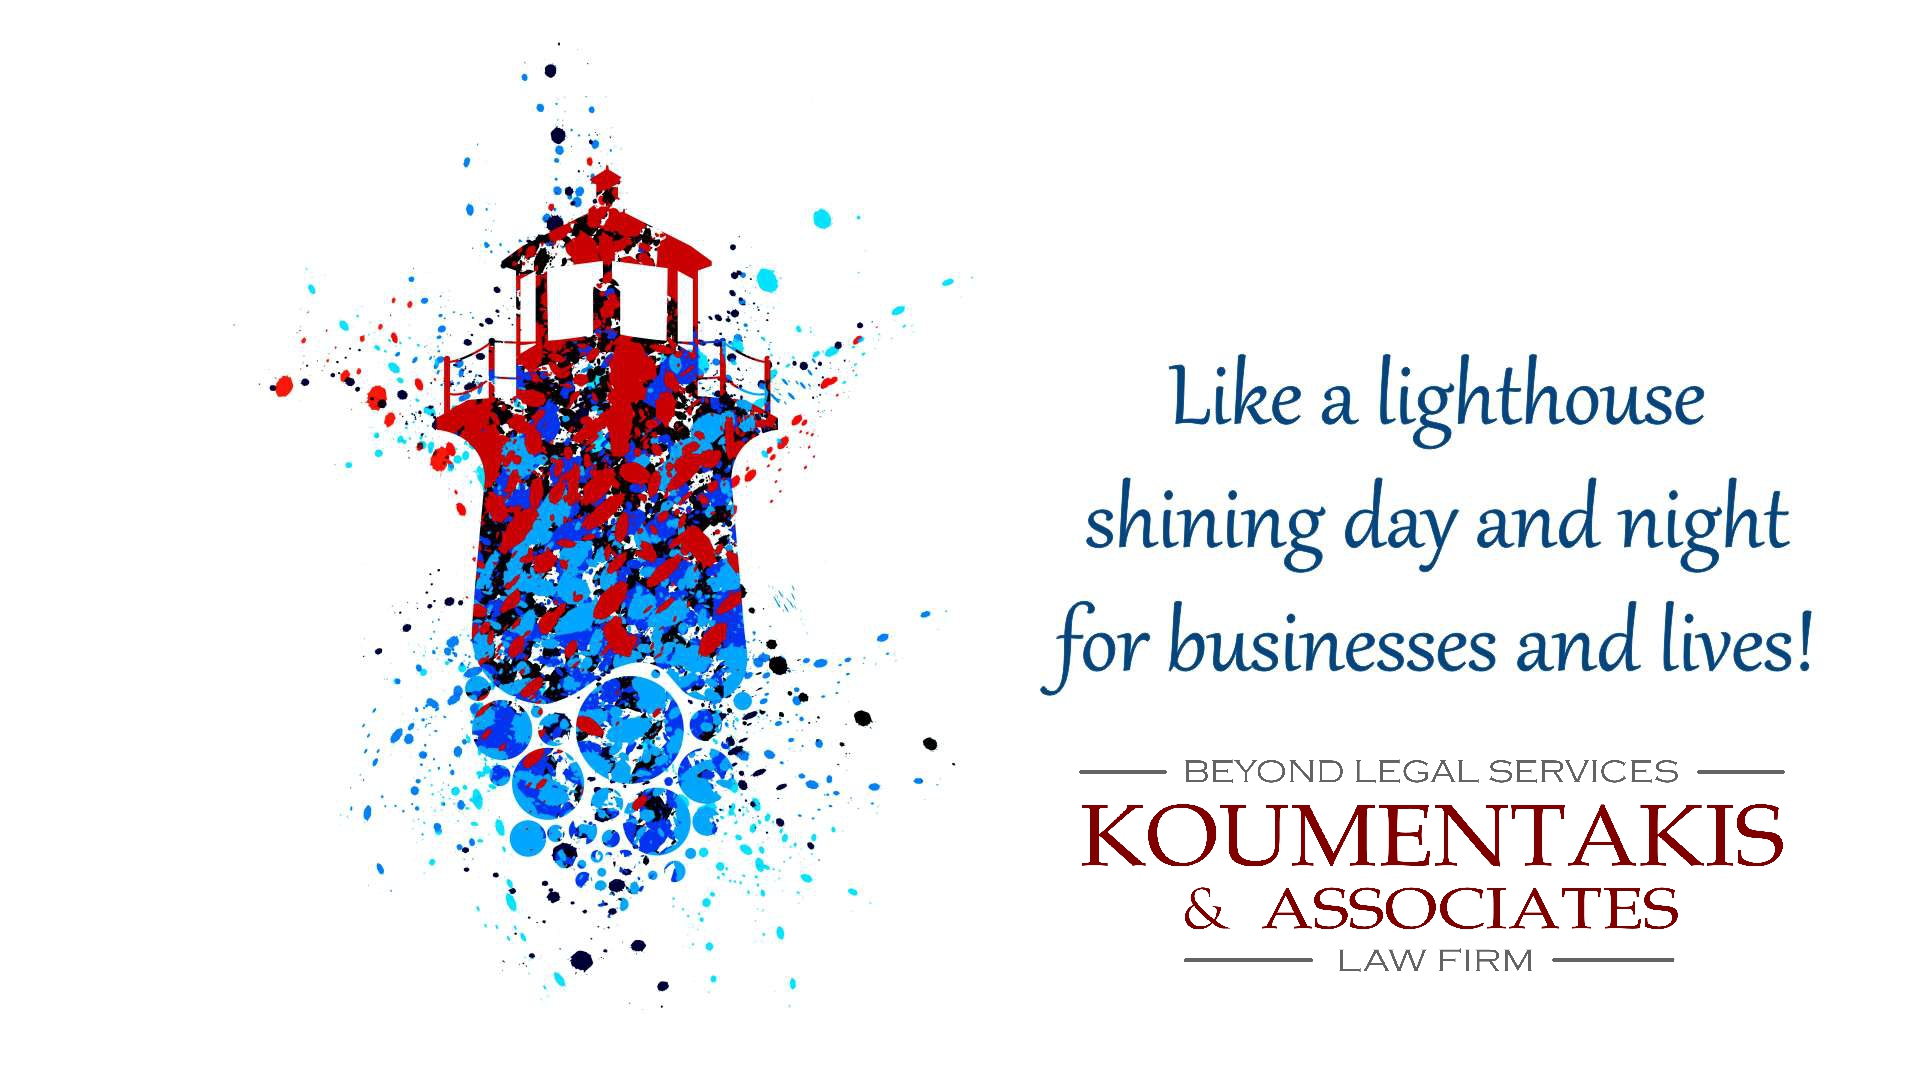 New Era For Koumentakis And Associates Law Firm